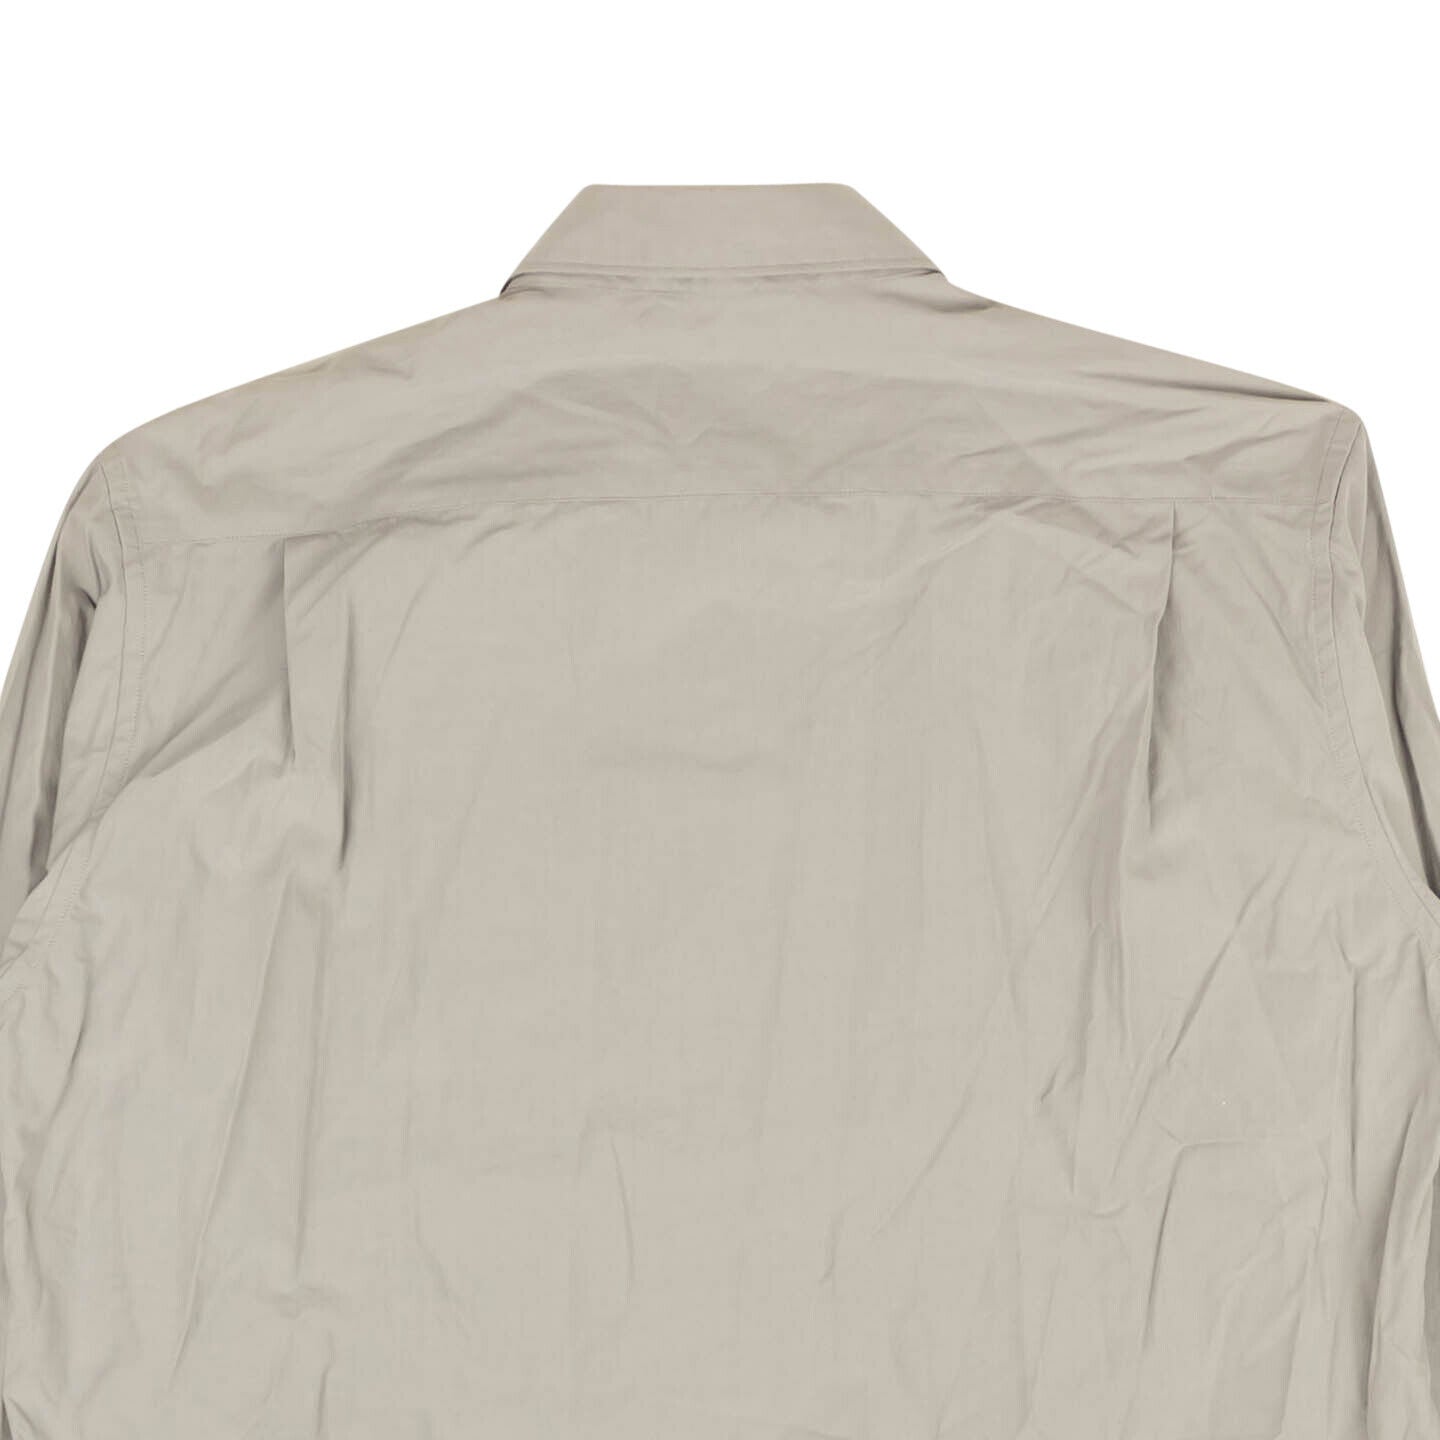 Kudos Double Opening Long Sleeve Shirt - Gray